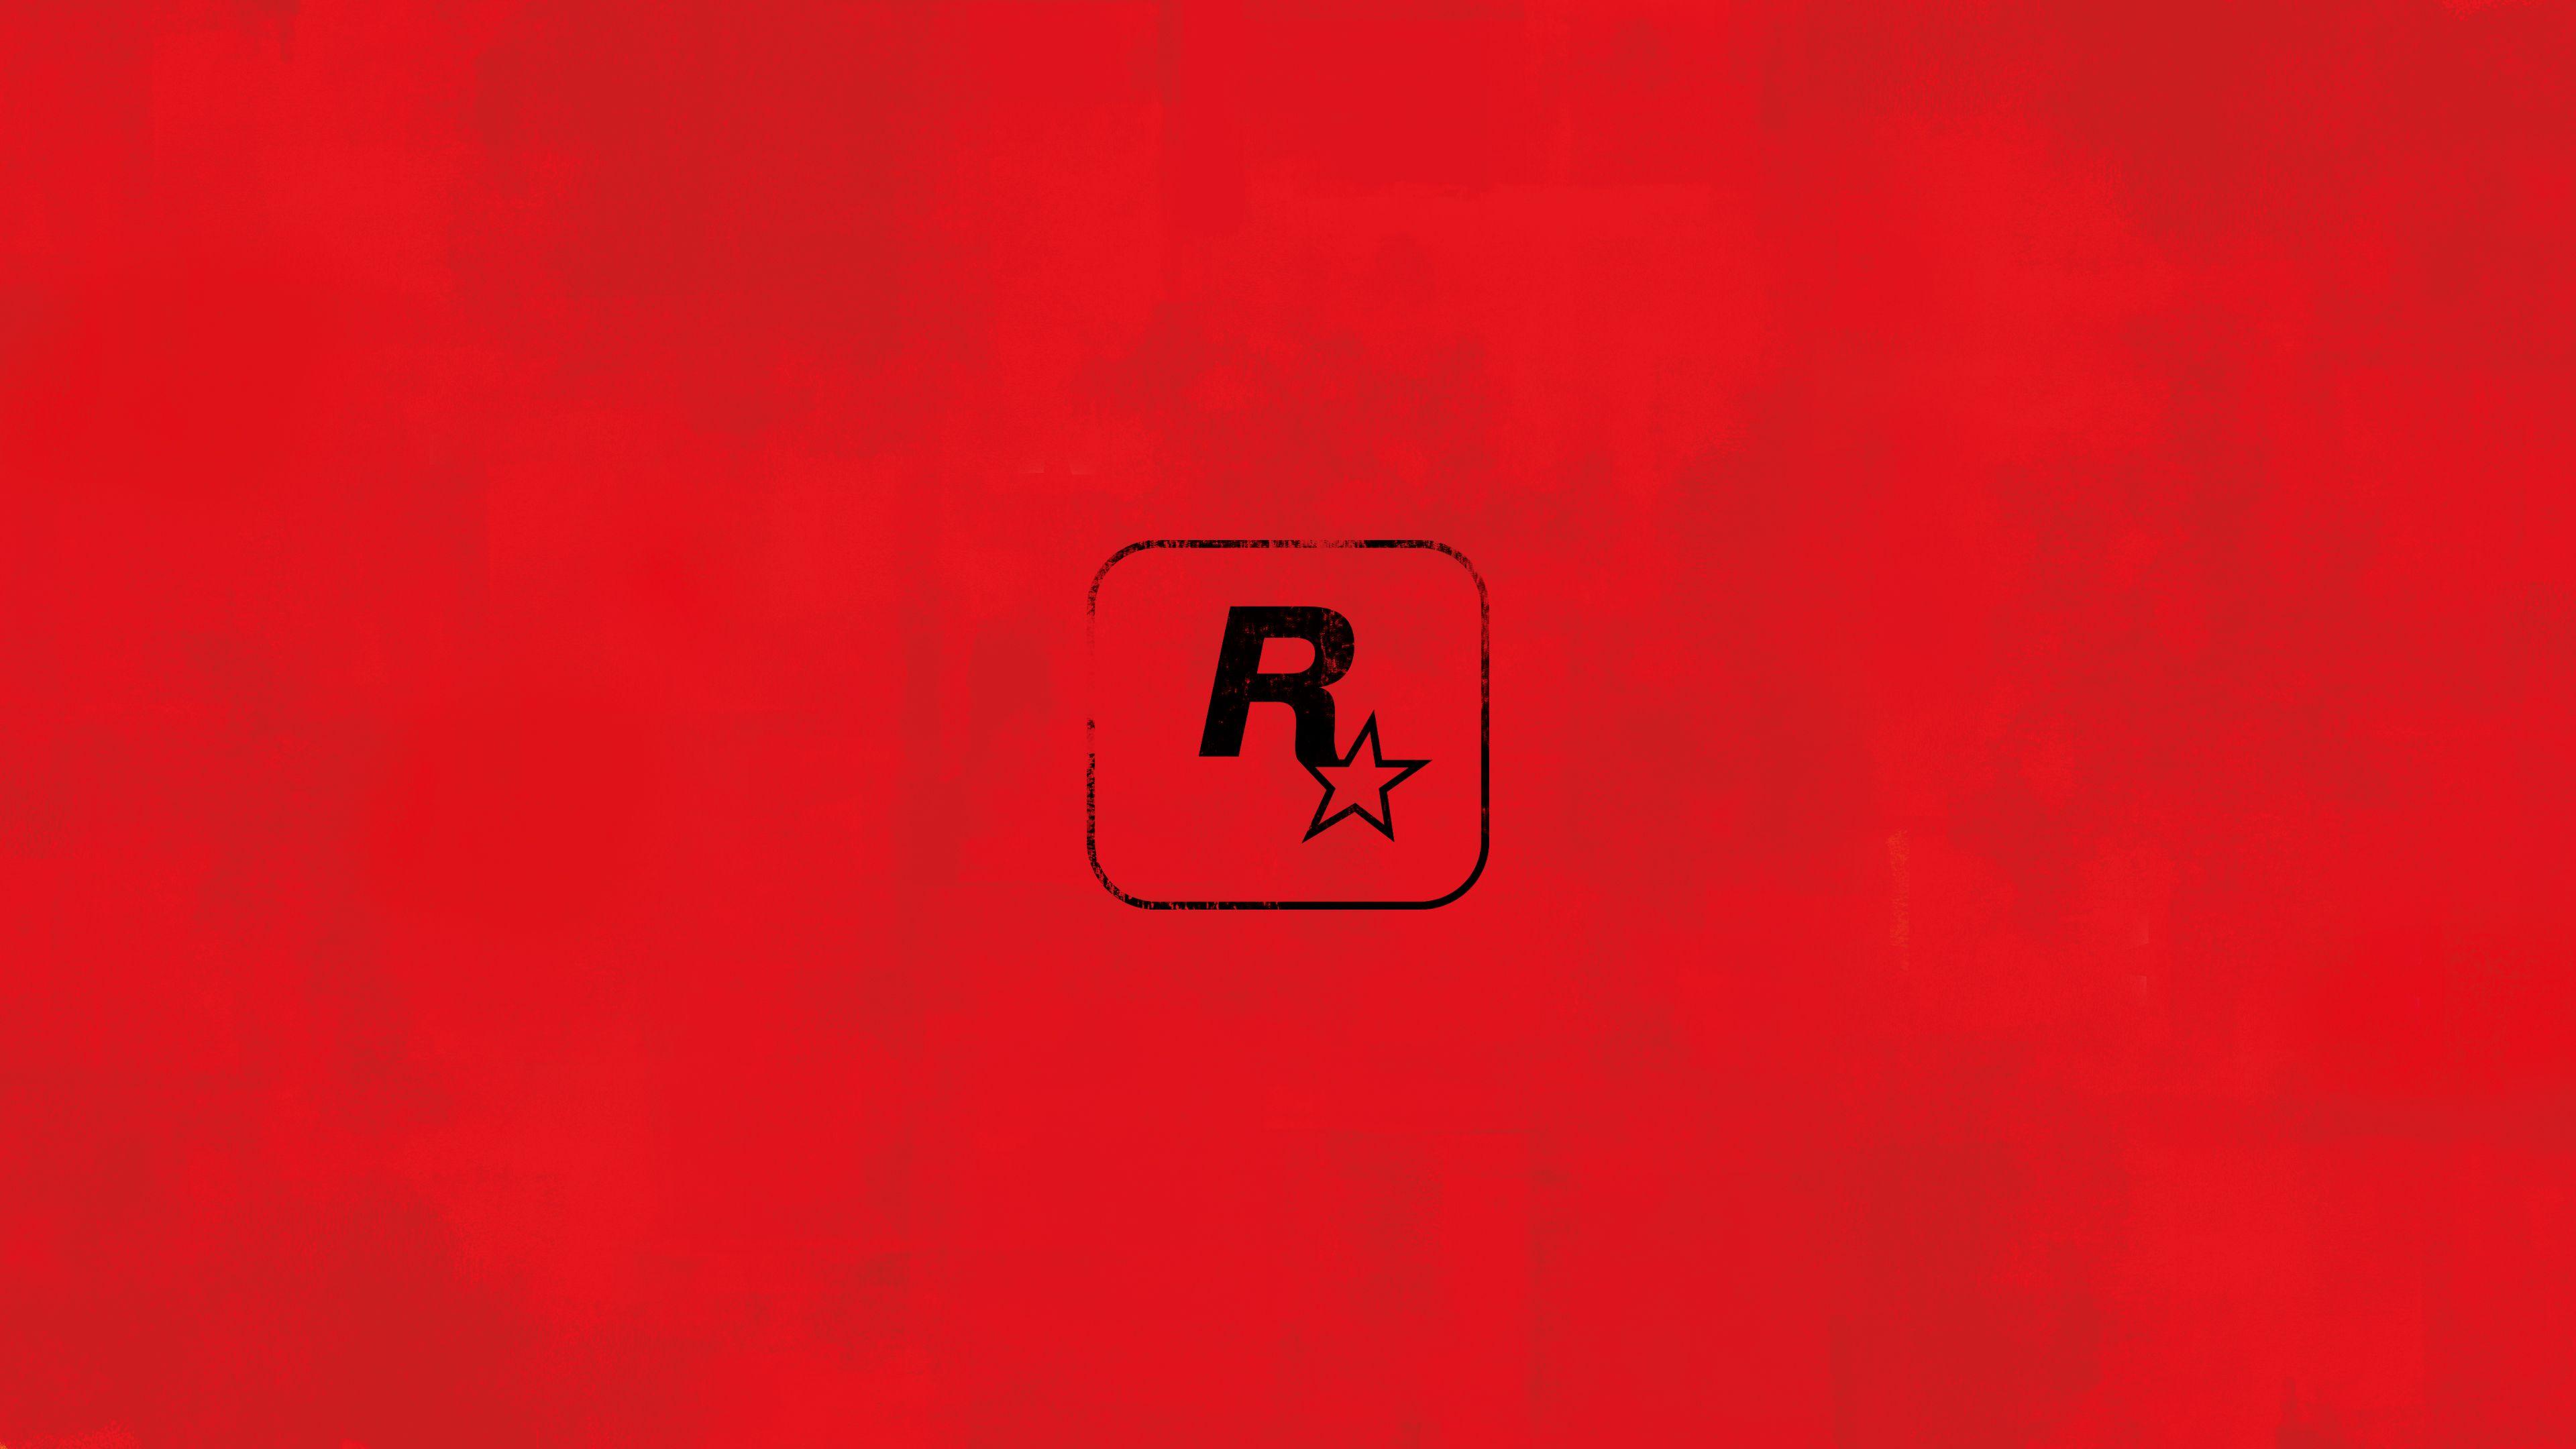 Rockstar Red Dead Redemption 2p Wallpaper